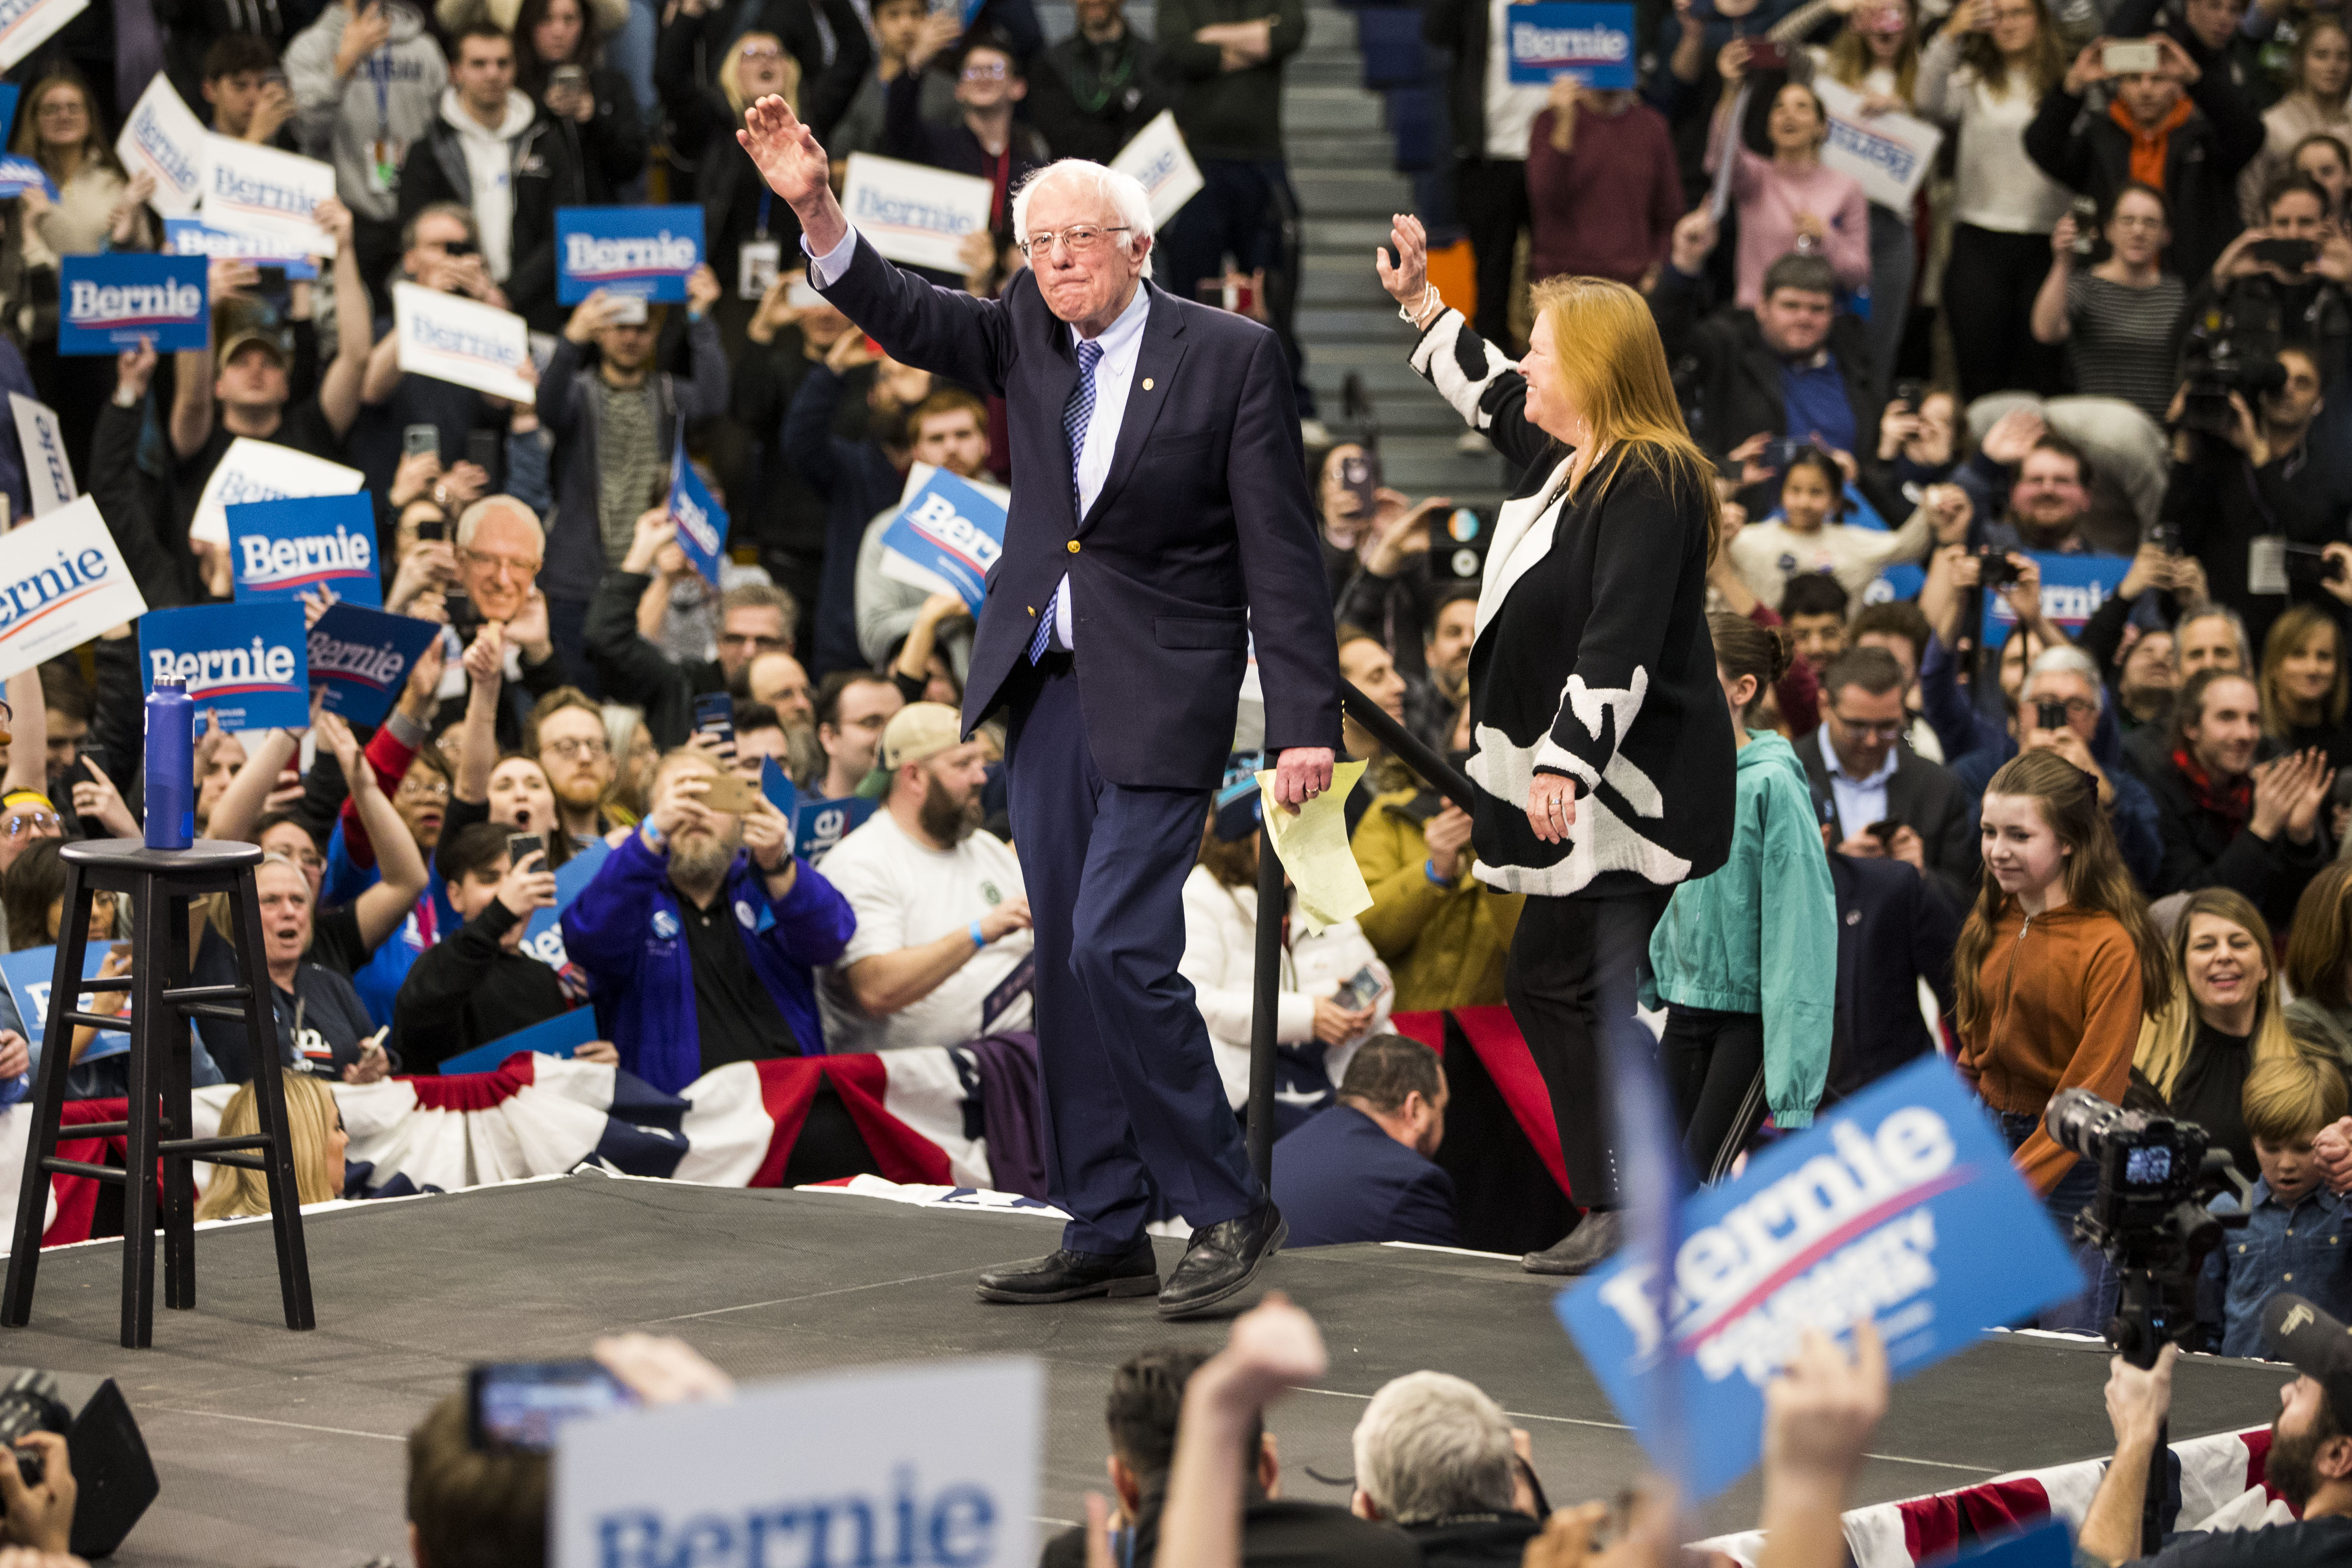 Analysis: Sanders’ Narrow Win Ups Pressure on Moderates to Coalesce